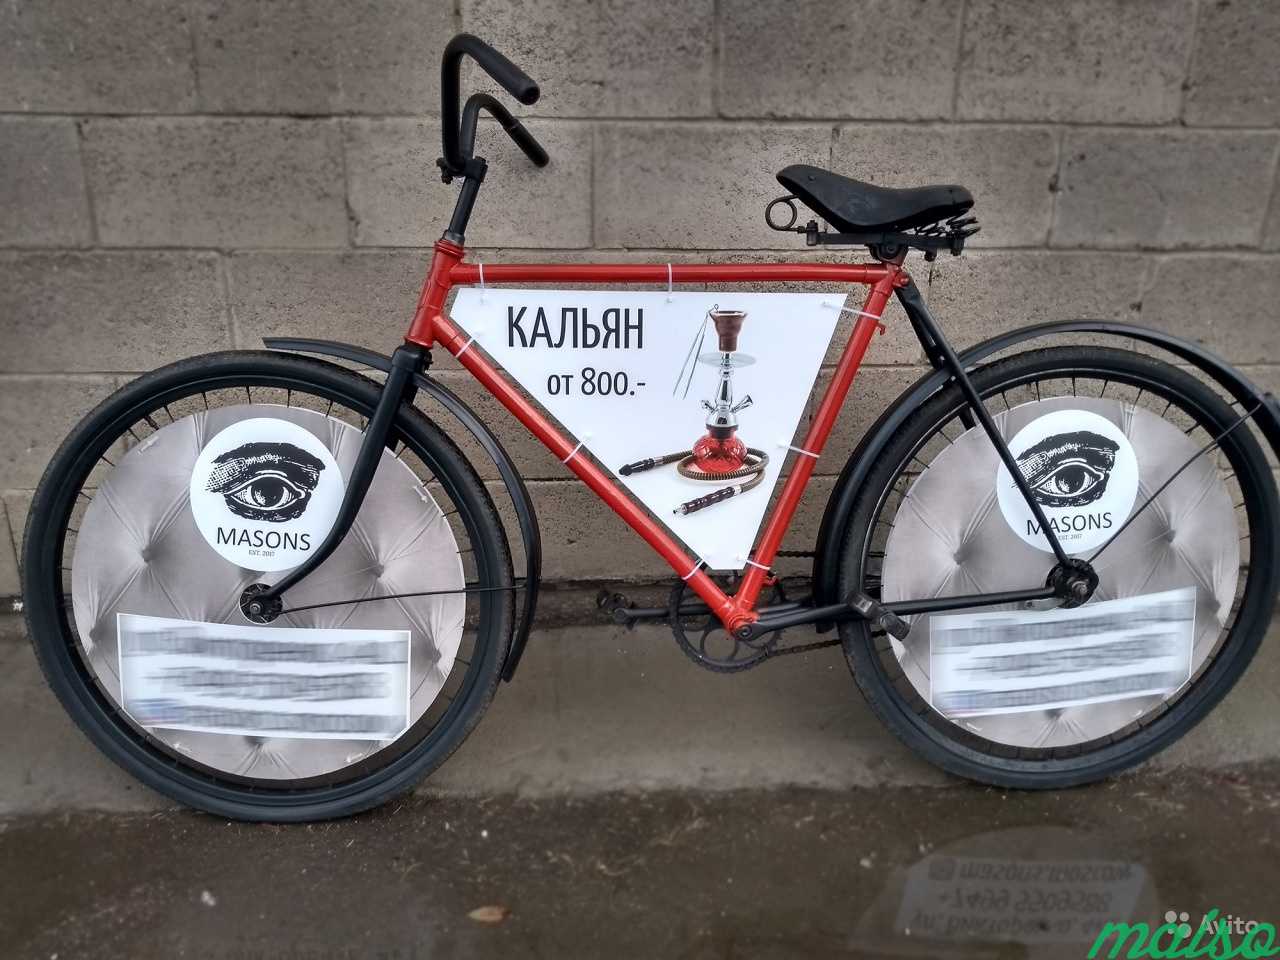 Реклама на велосипеде, велосипеды с рекламой в Москве. Фото 6